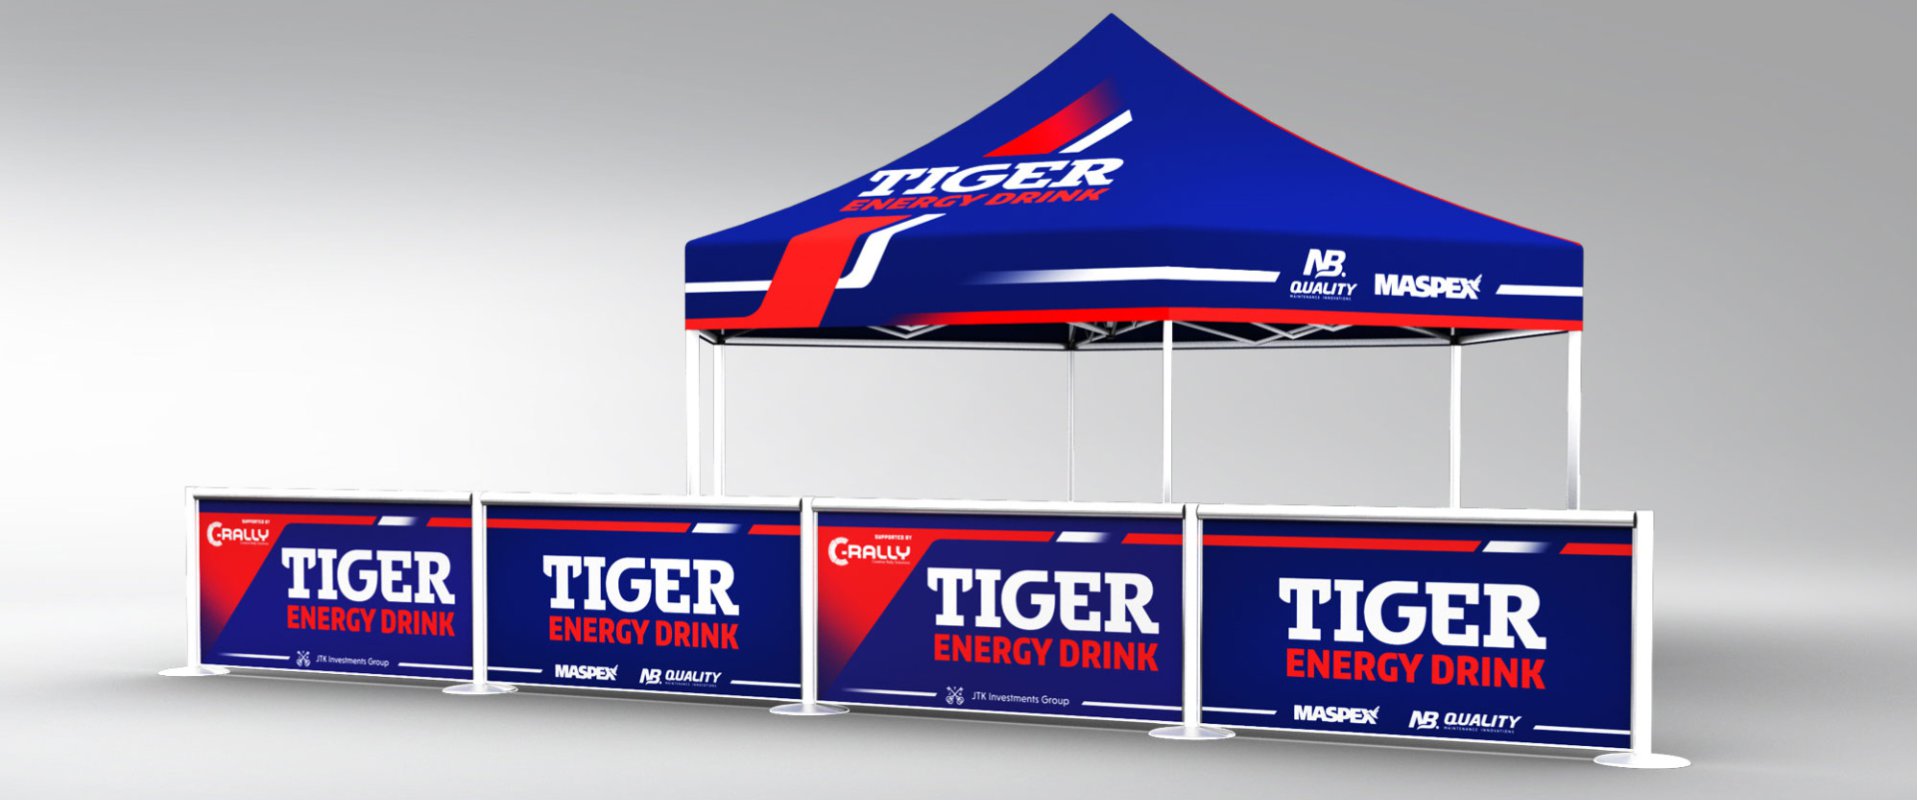 Tiger Energy Drink Rally Team #2